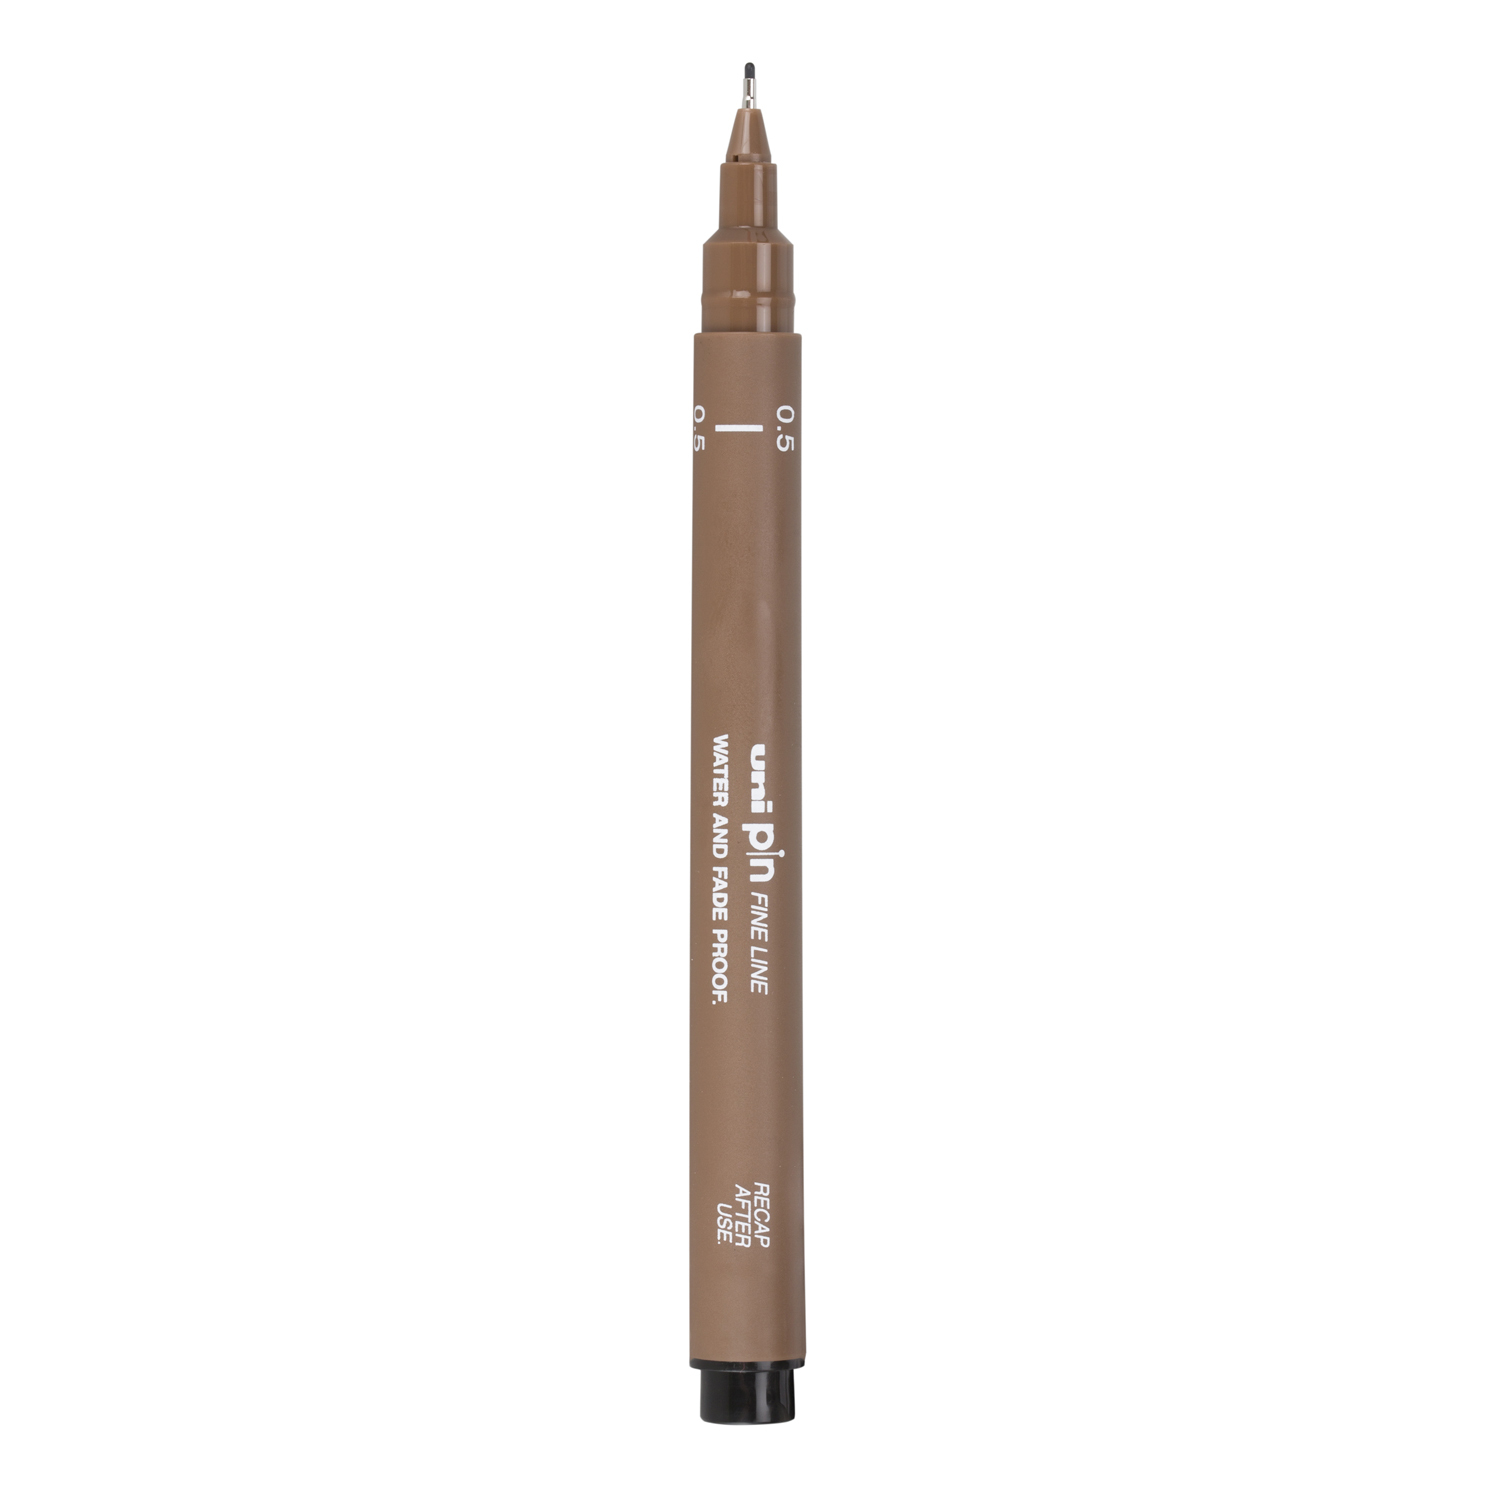 Uniball Pin Fine Liner Drawing Pen - Sepia / 0.5mm Image 2